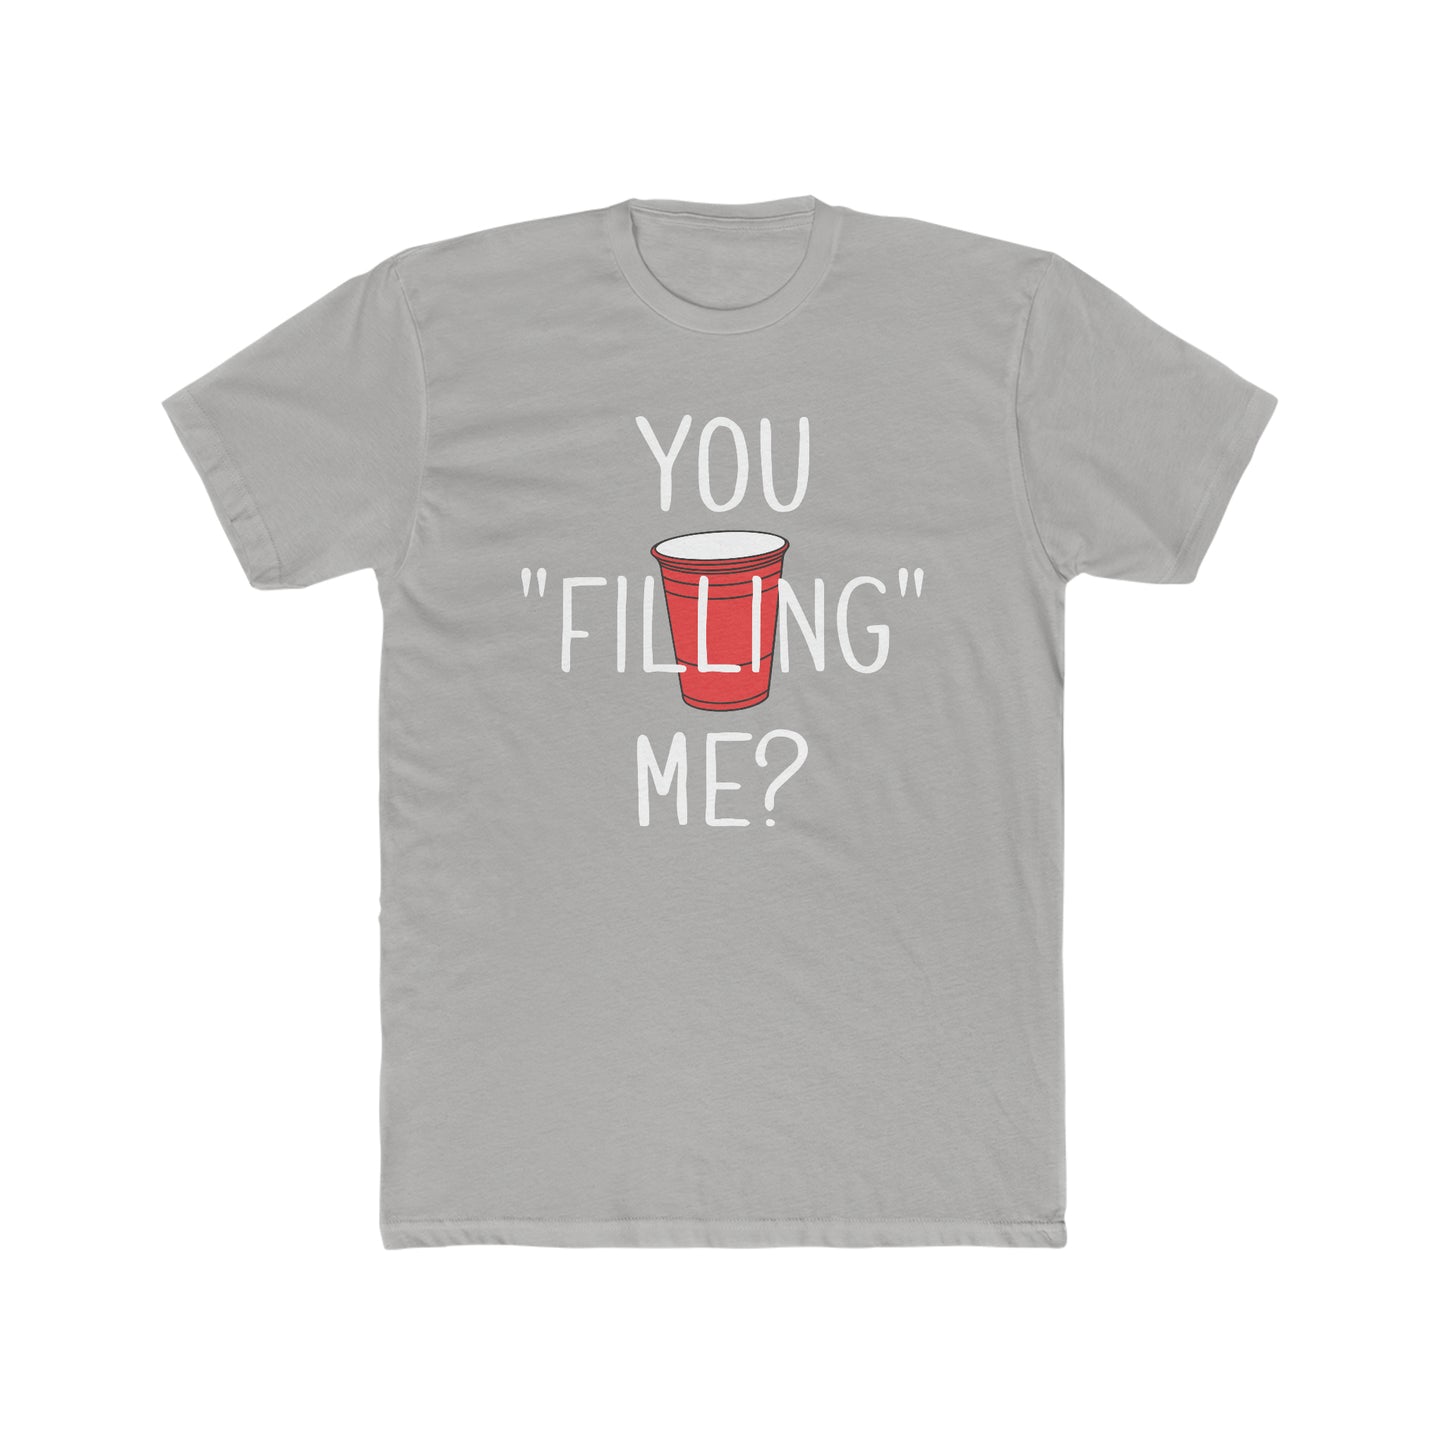 You "Filling" Me? Blk Short Sleeve T-Shirt